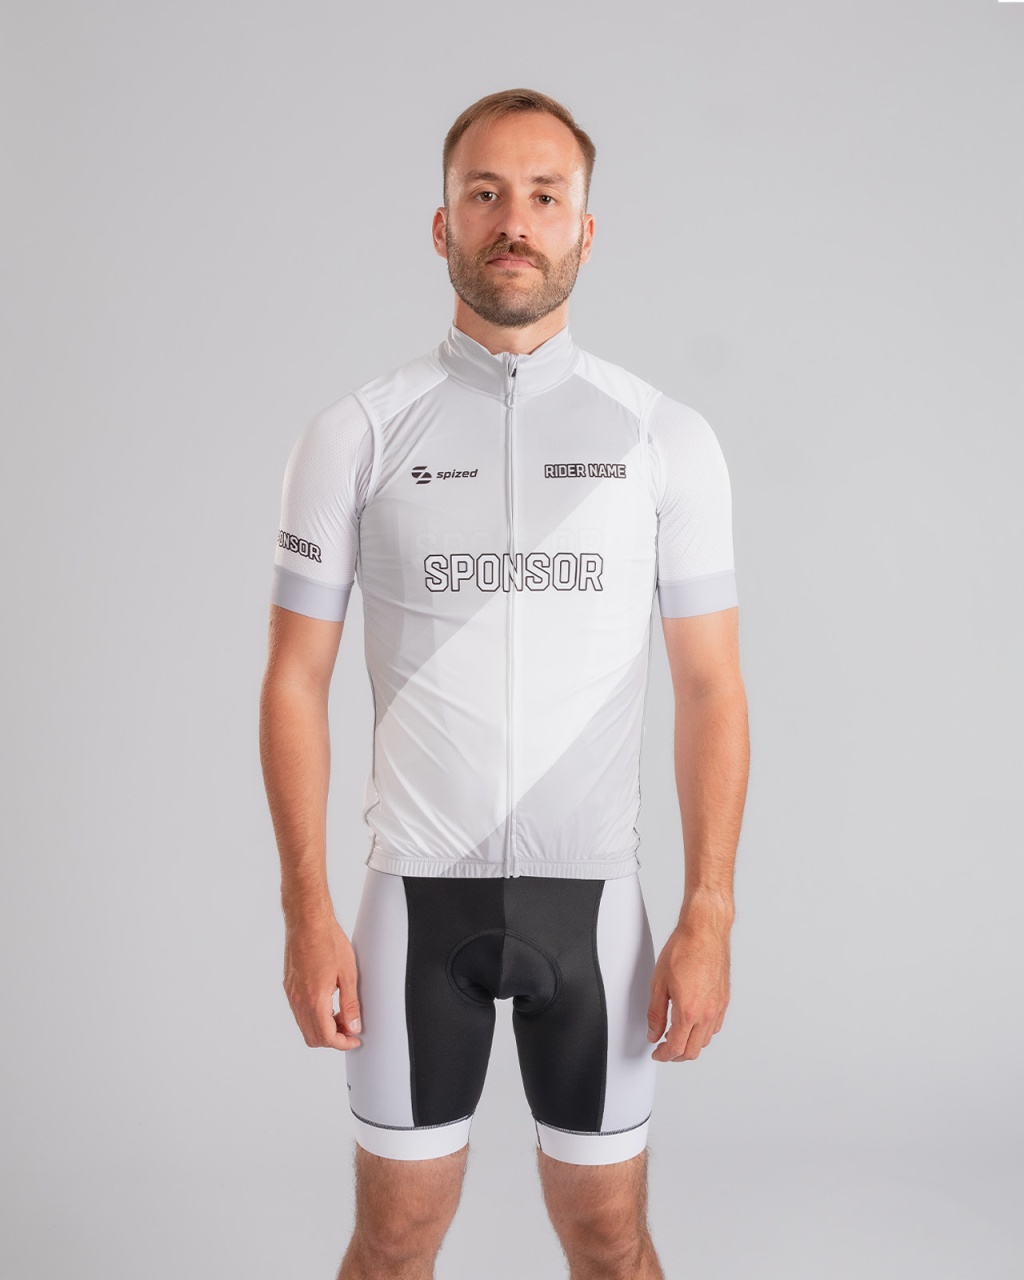 Performance men's cycling vest